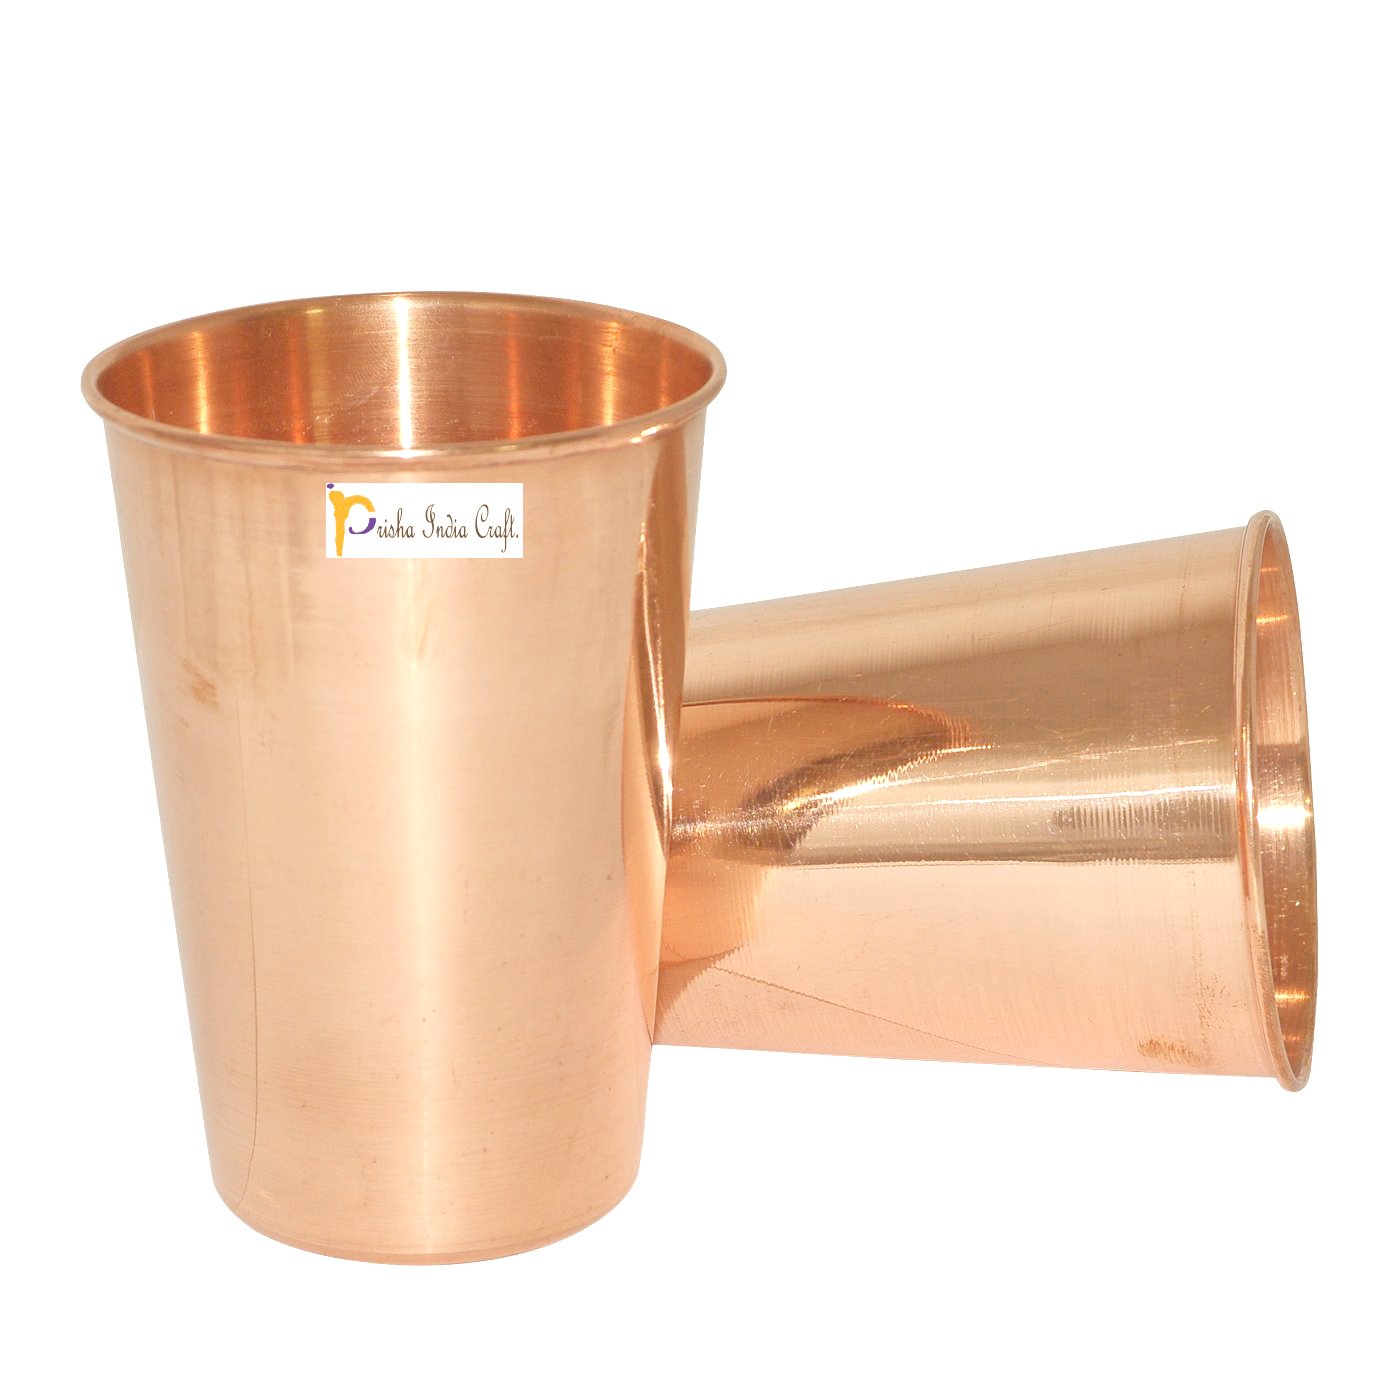 Prisha India Craft Pure Copper Glass Tumbler, Drinkware Set, Capacity 400 ML, Set of 2 Pieces